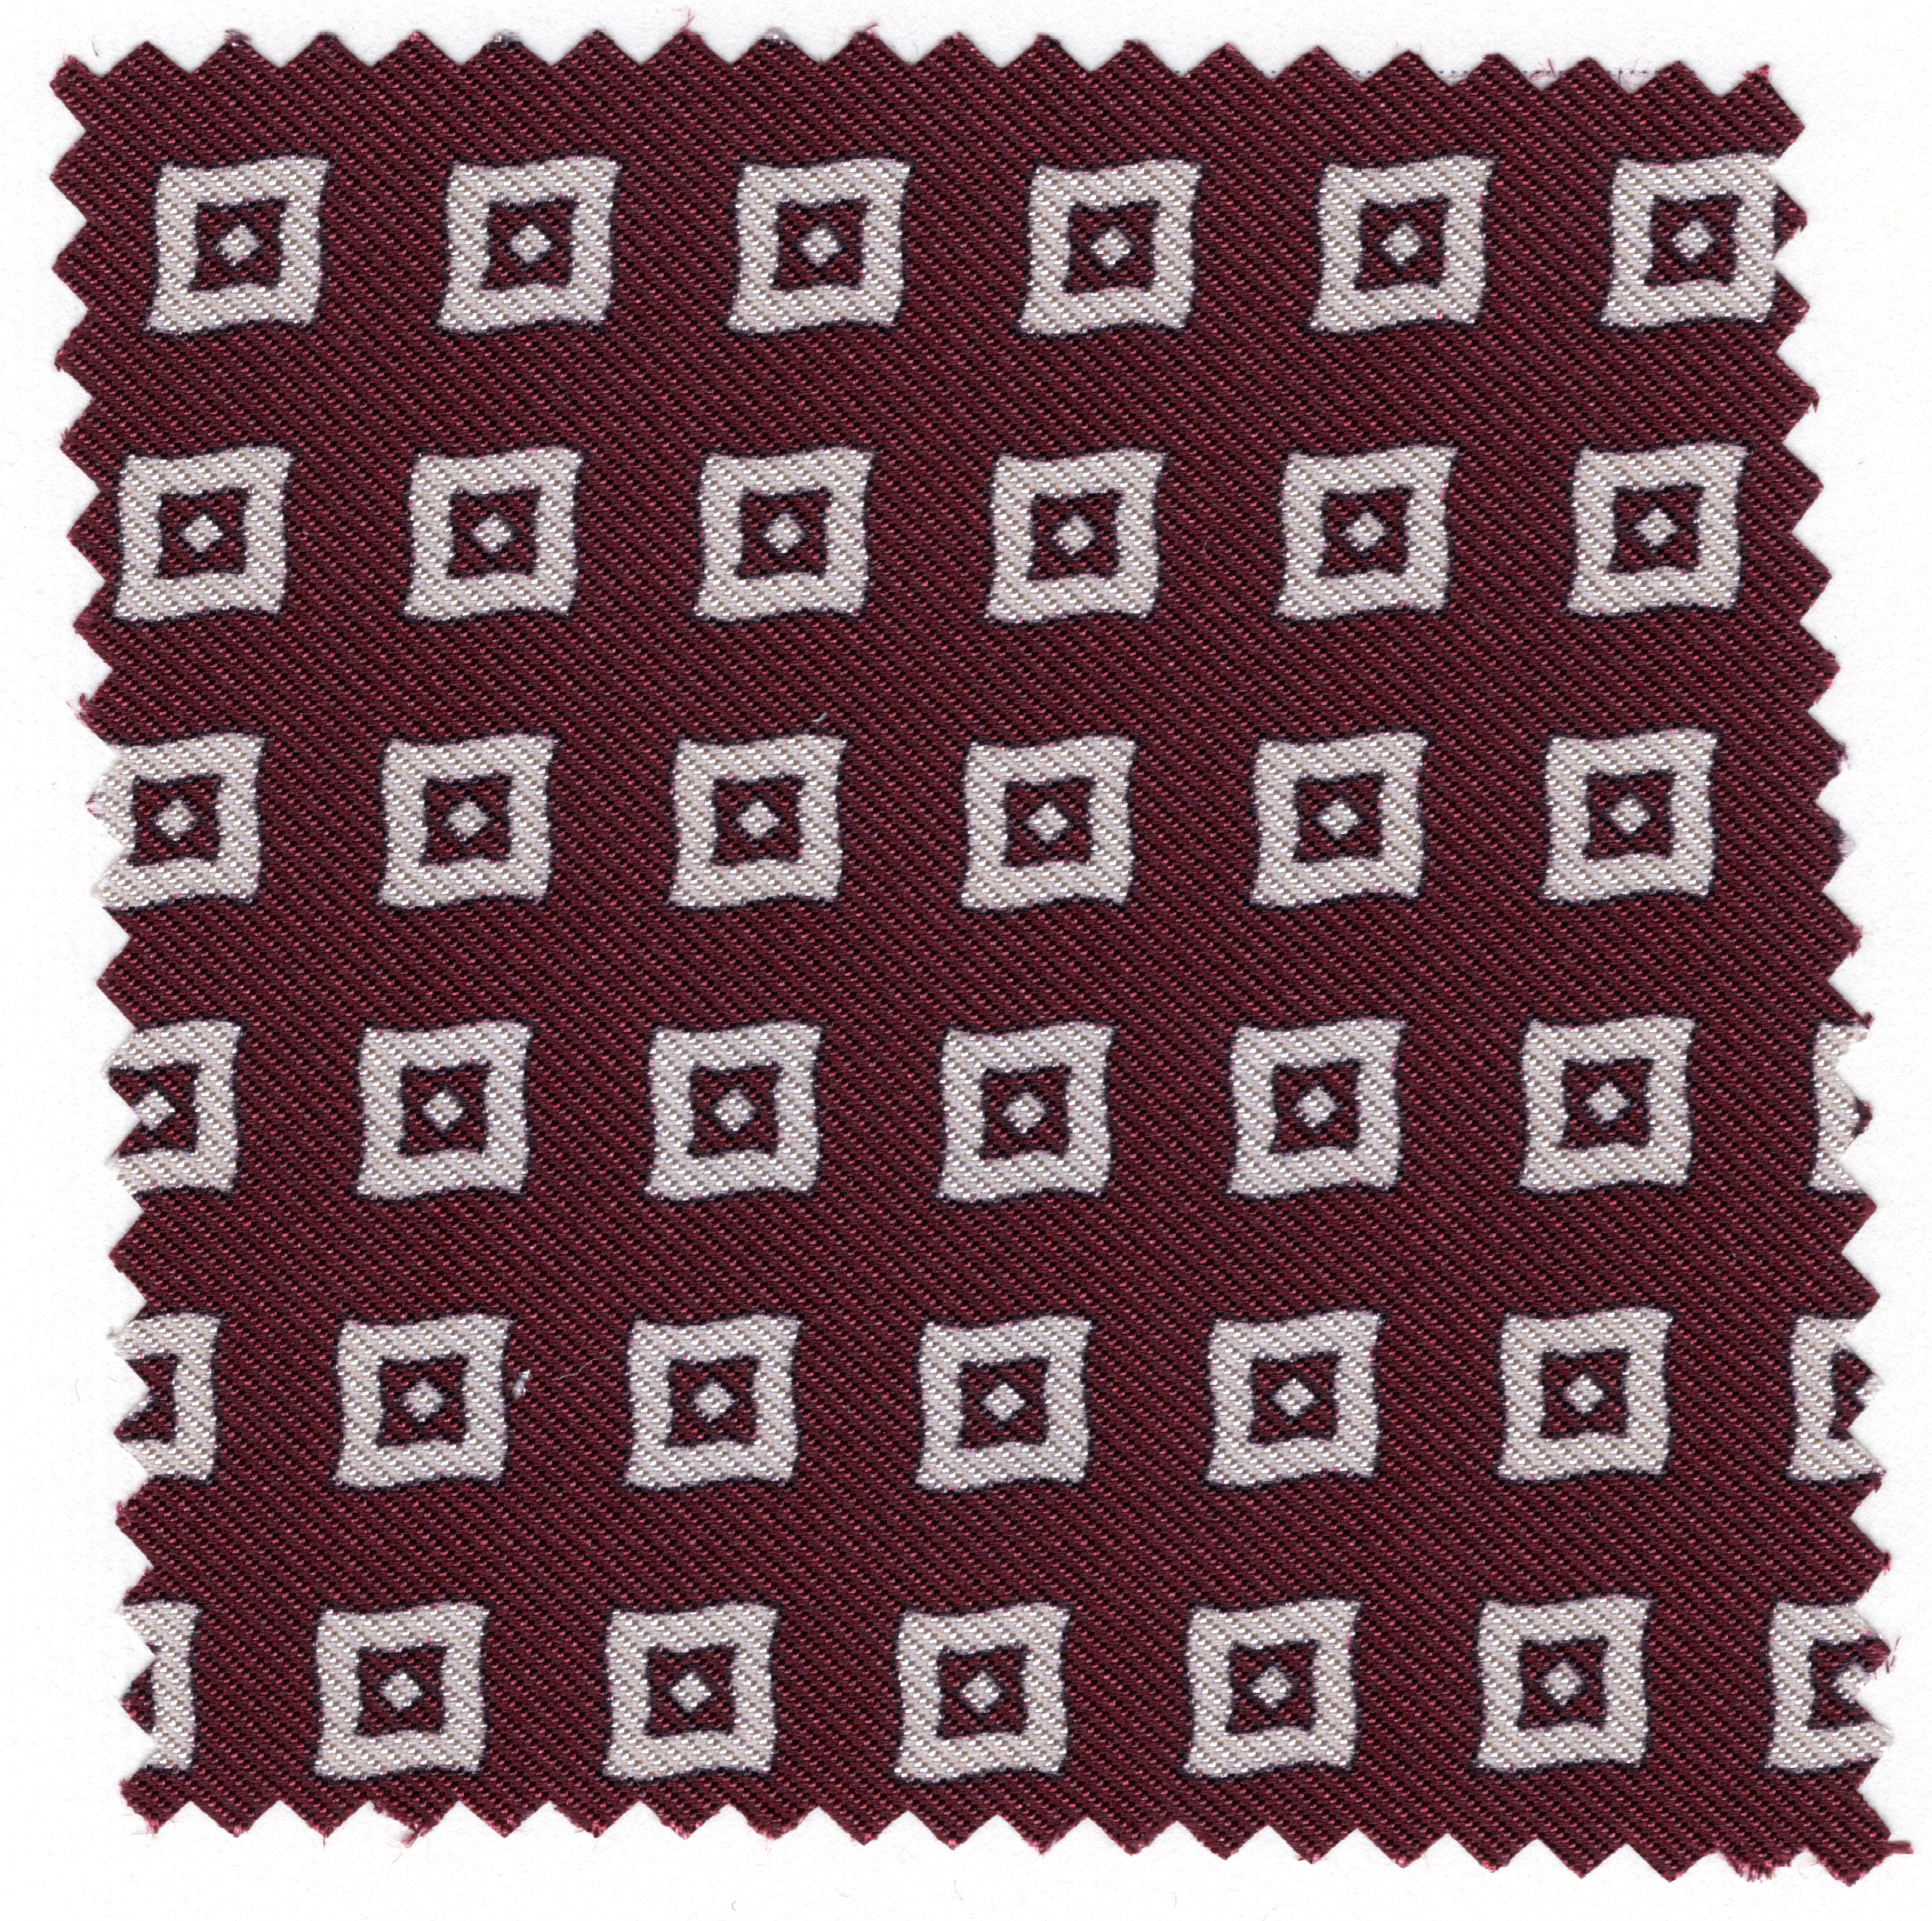 Tailored seven fold tie - micro pattern 9564-4